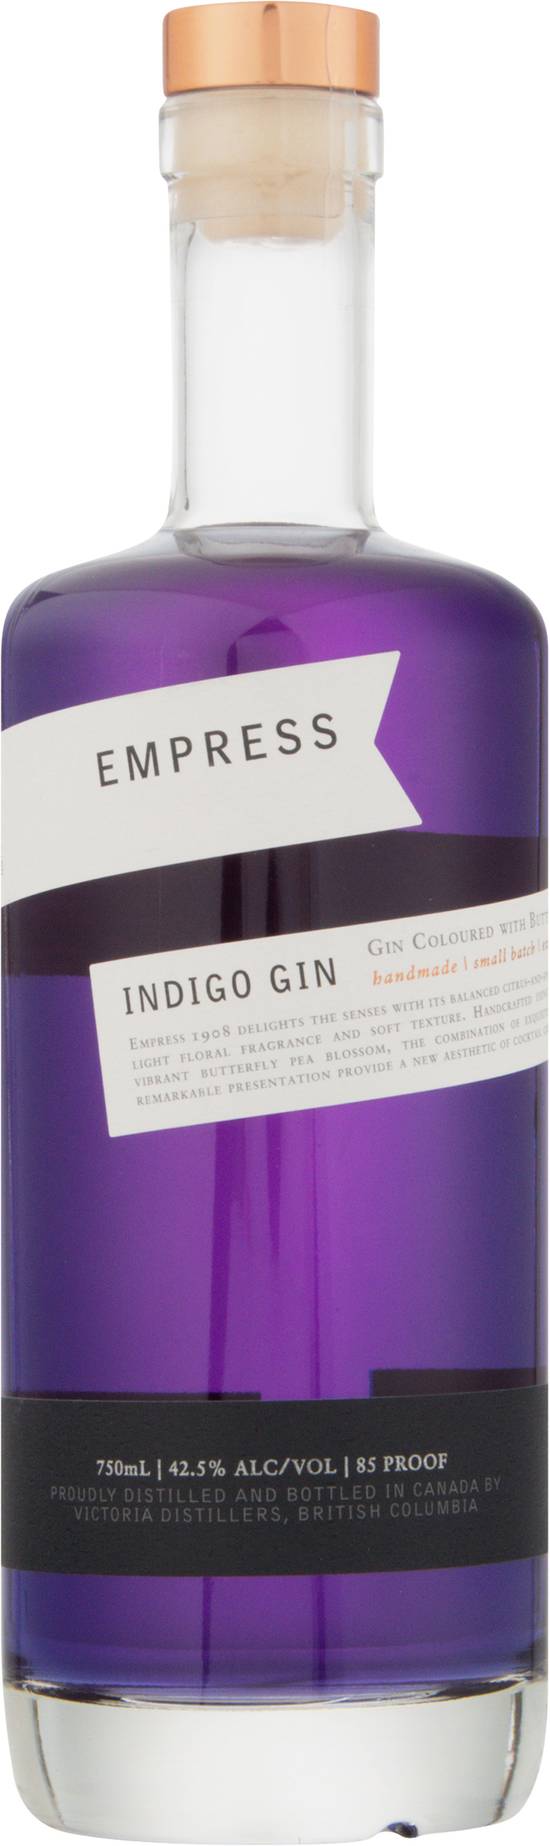 Empress Original Indigo Dry Gin 1908 Wine (750 ml)